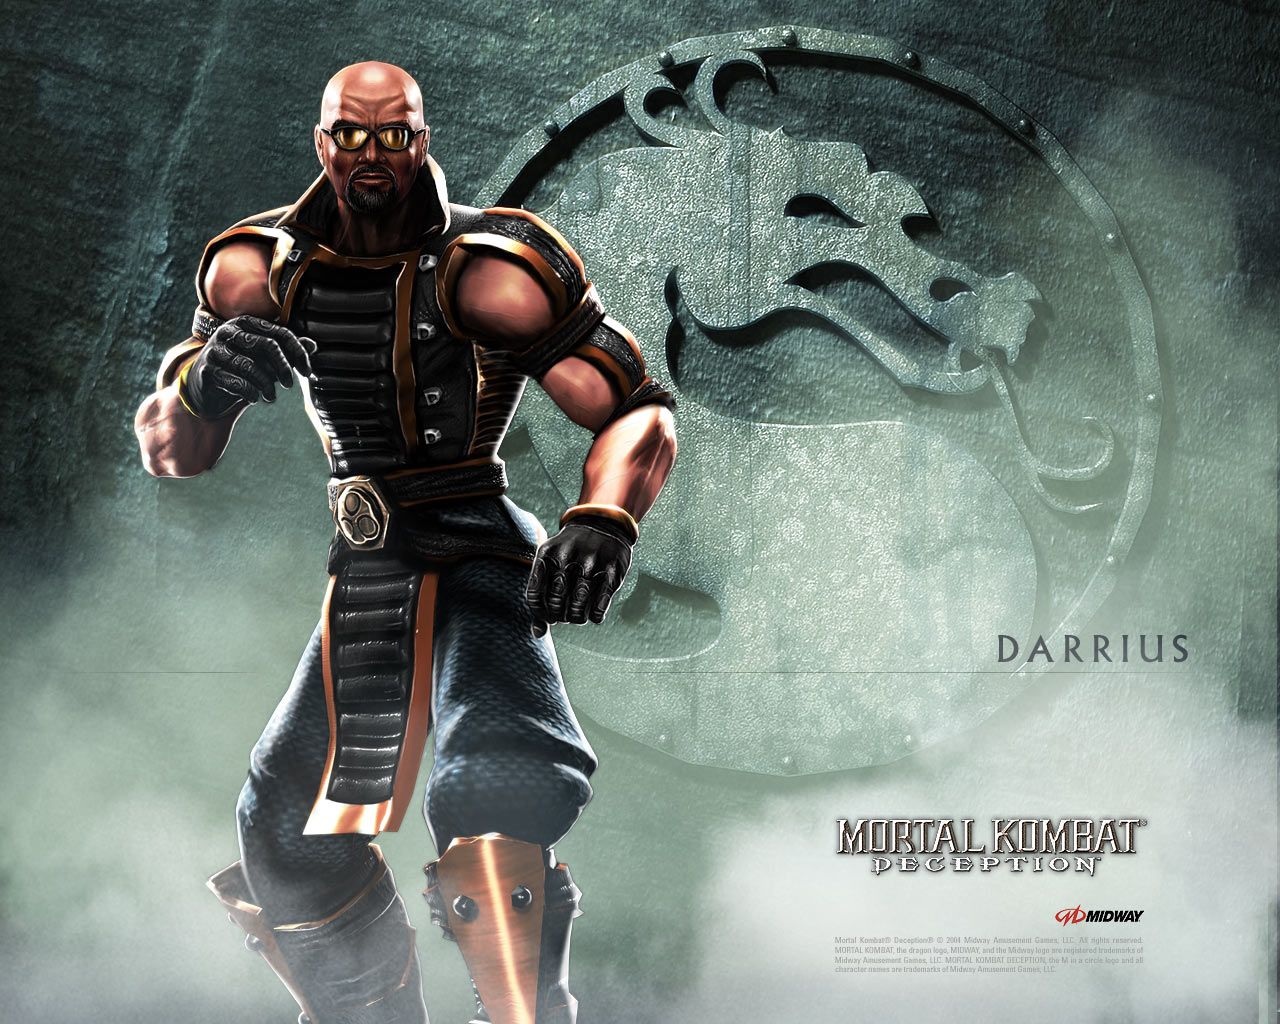 Darrius Mortal Kombat: Deception picture. Mortal kombat, 1280x Game